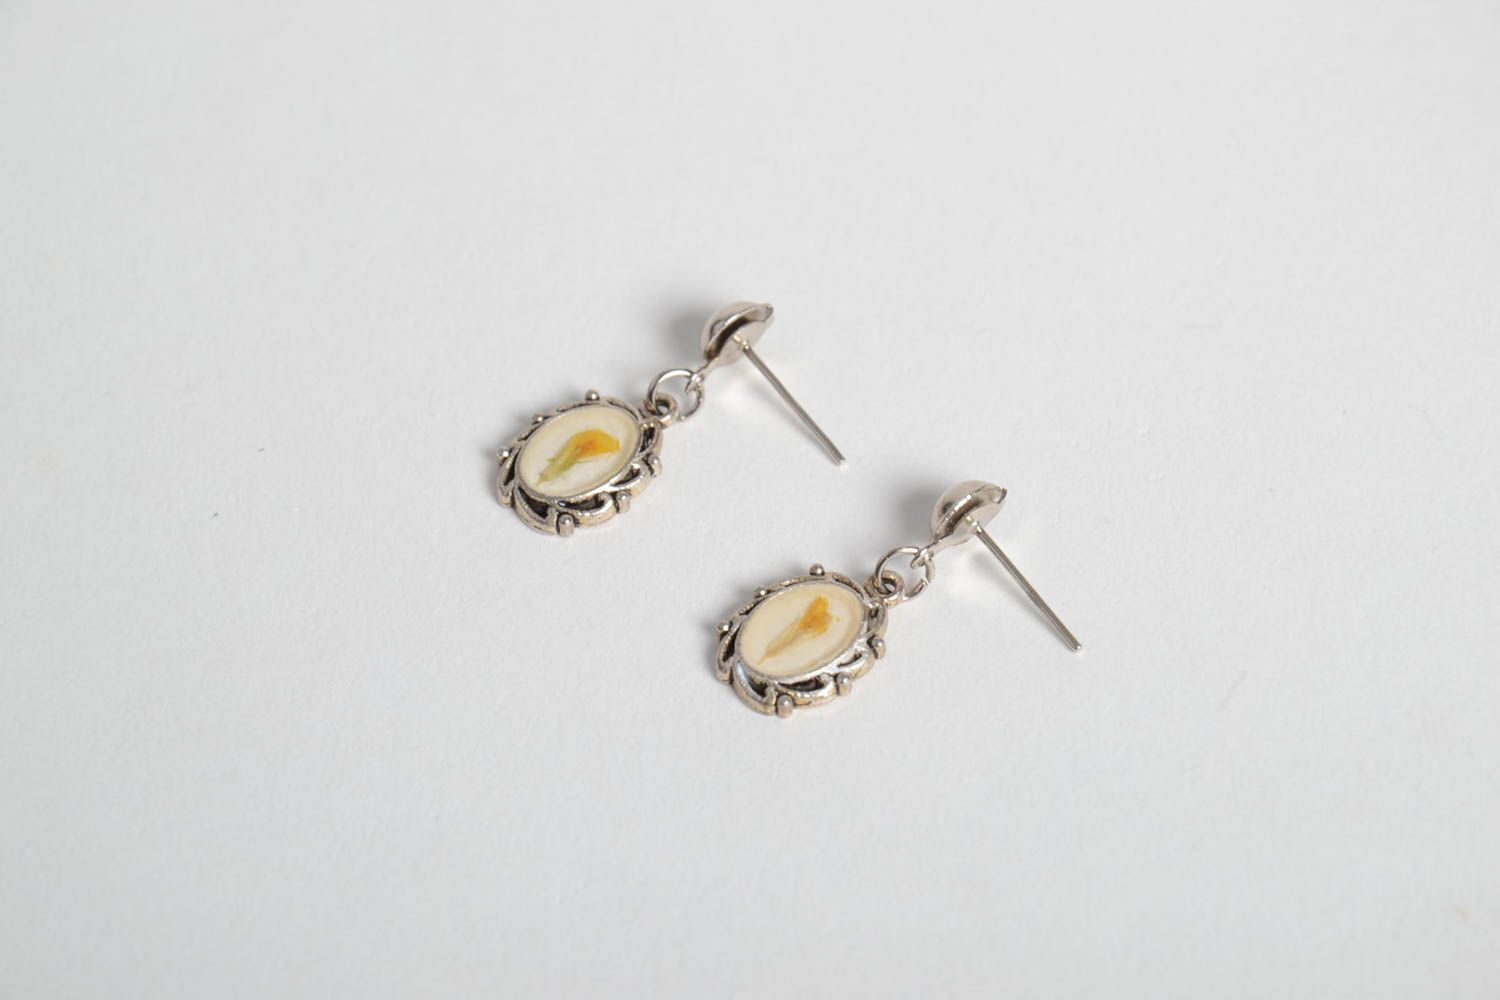 Handmade beautiful earrings designer dry flower earrings cute botanical jewelry photo 2